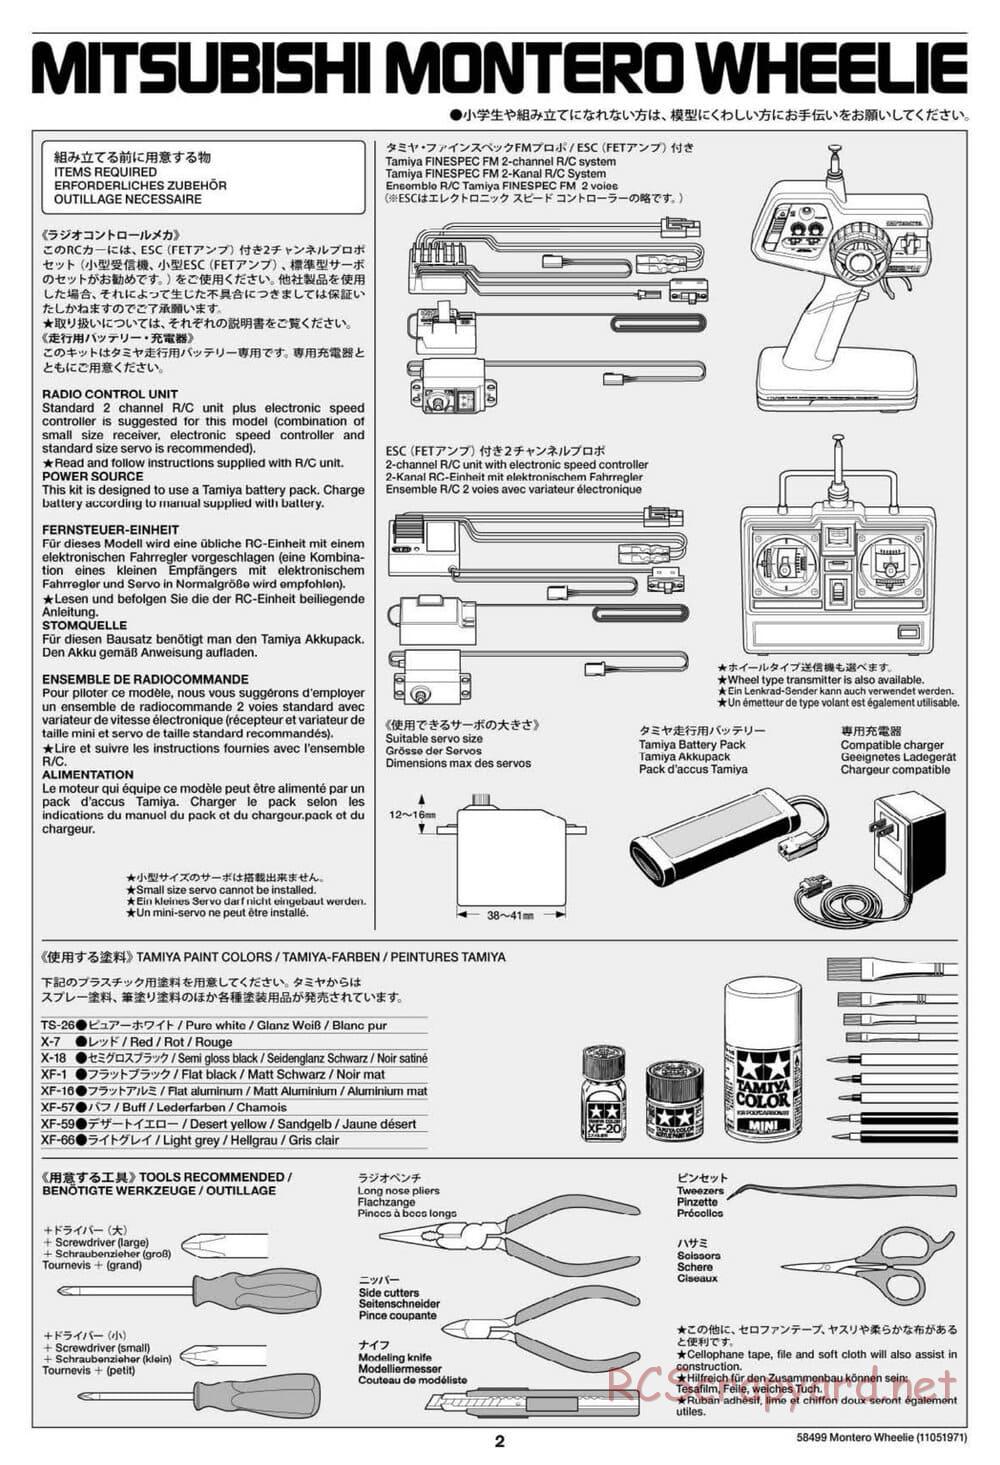 Tamiya - Mitsubishi Montero Wheelie - CW-01 Chassis - Manual - Page 2